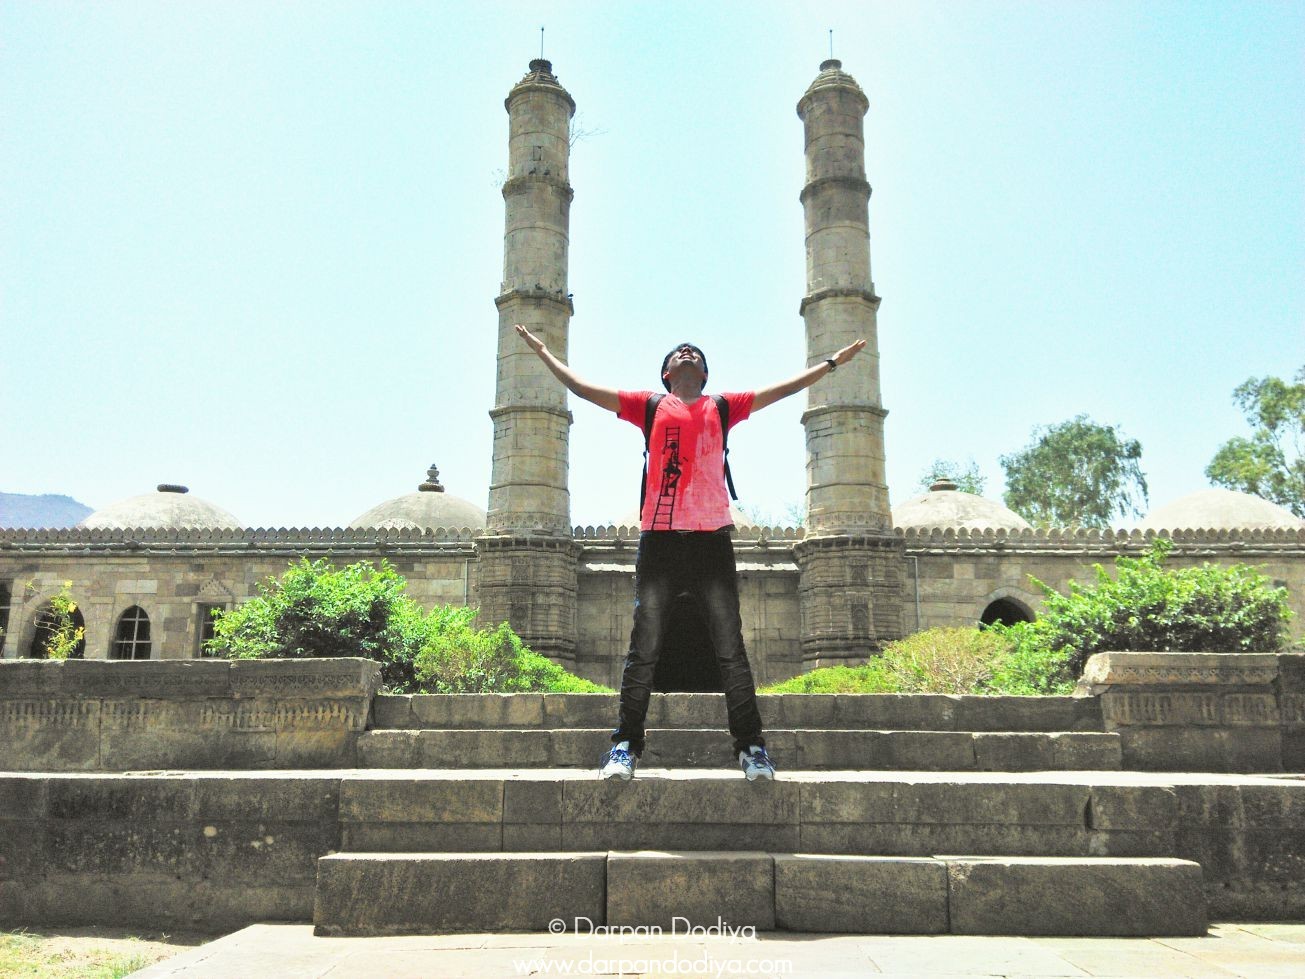 The power pose at Champaner Pavagadh